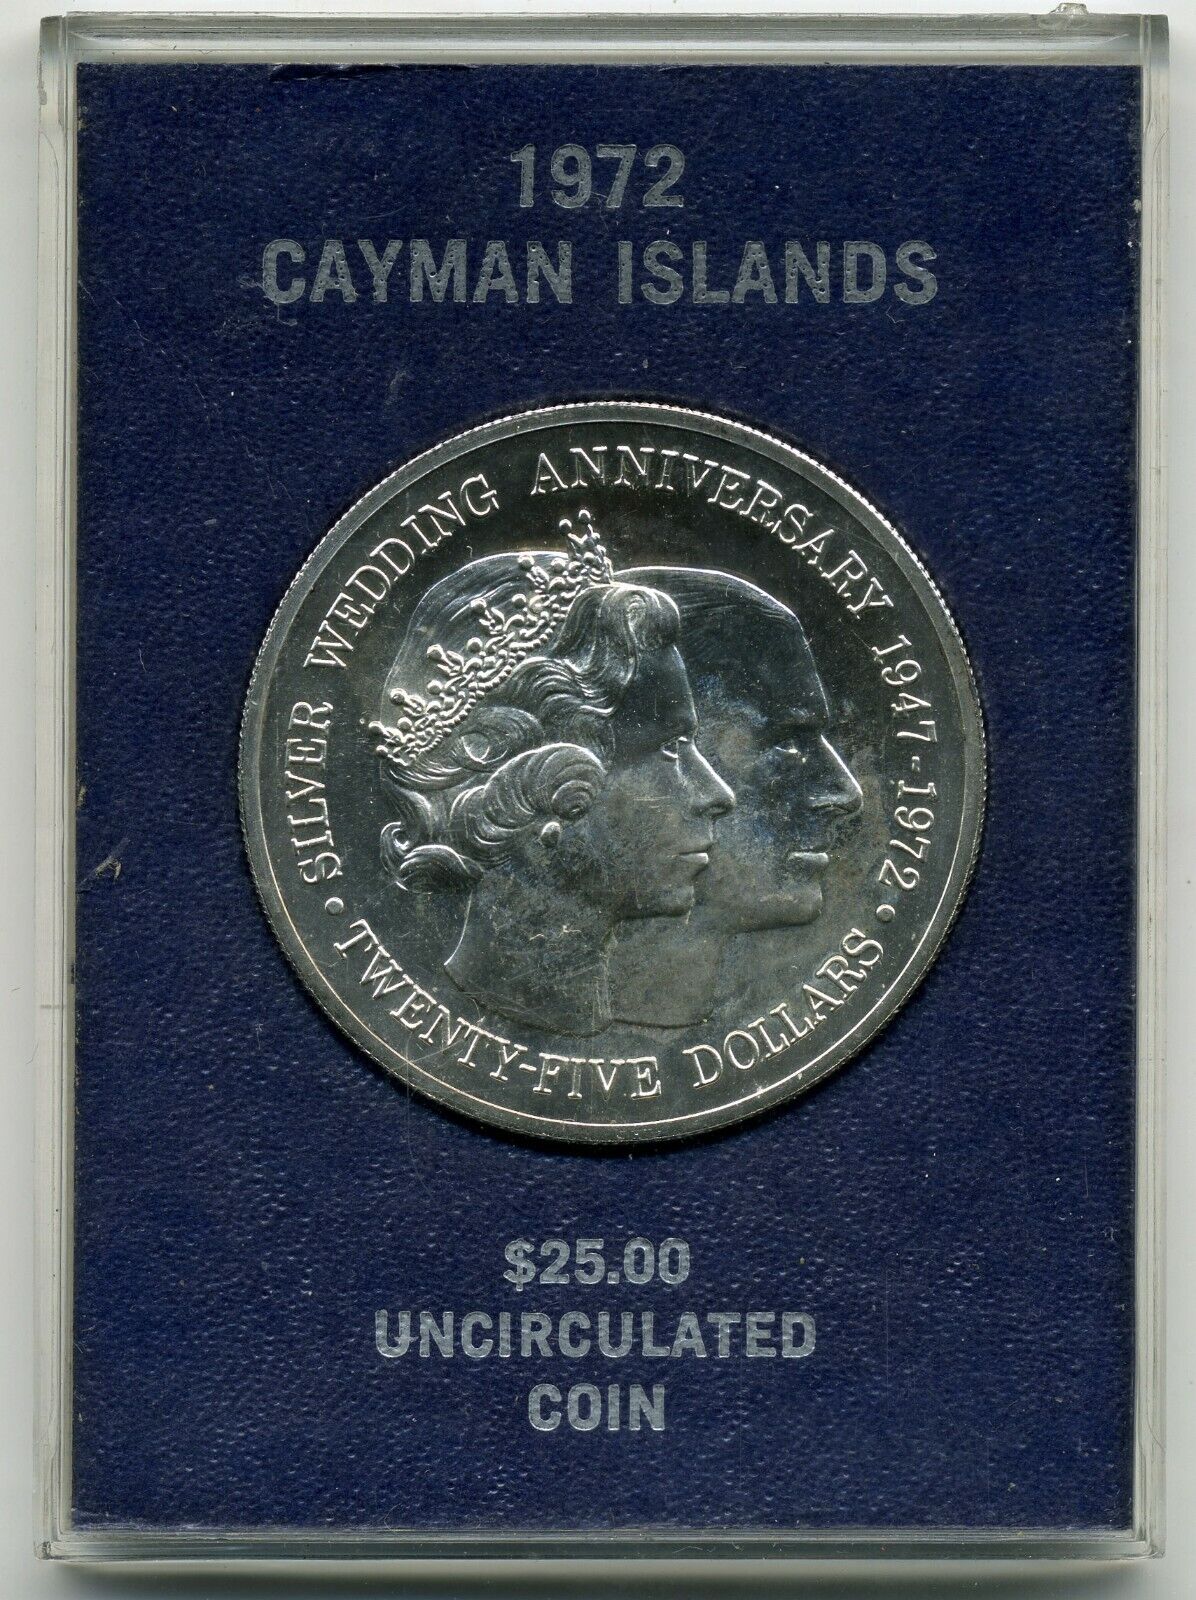 CAYMAN ISLANDS 1972 ROYAL 25TH ANNIVERSARY $25 BU IN PLASTIC HOLDER